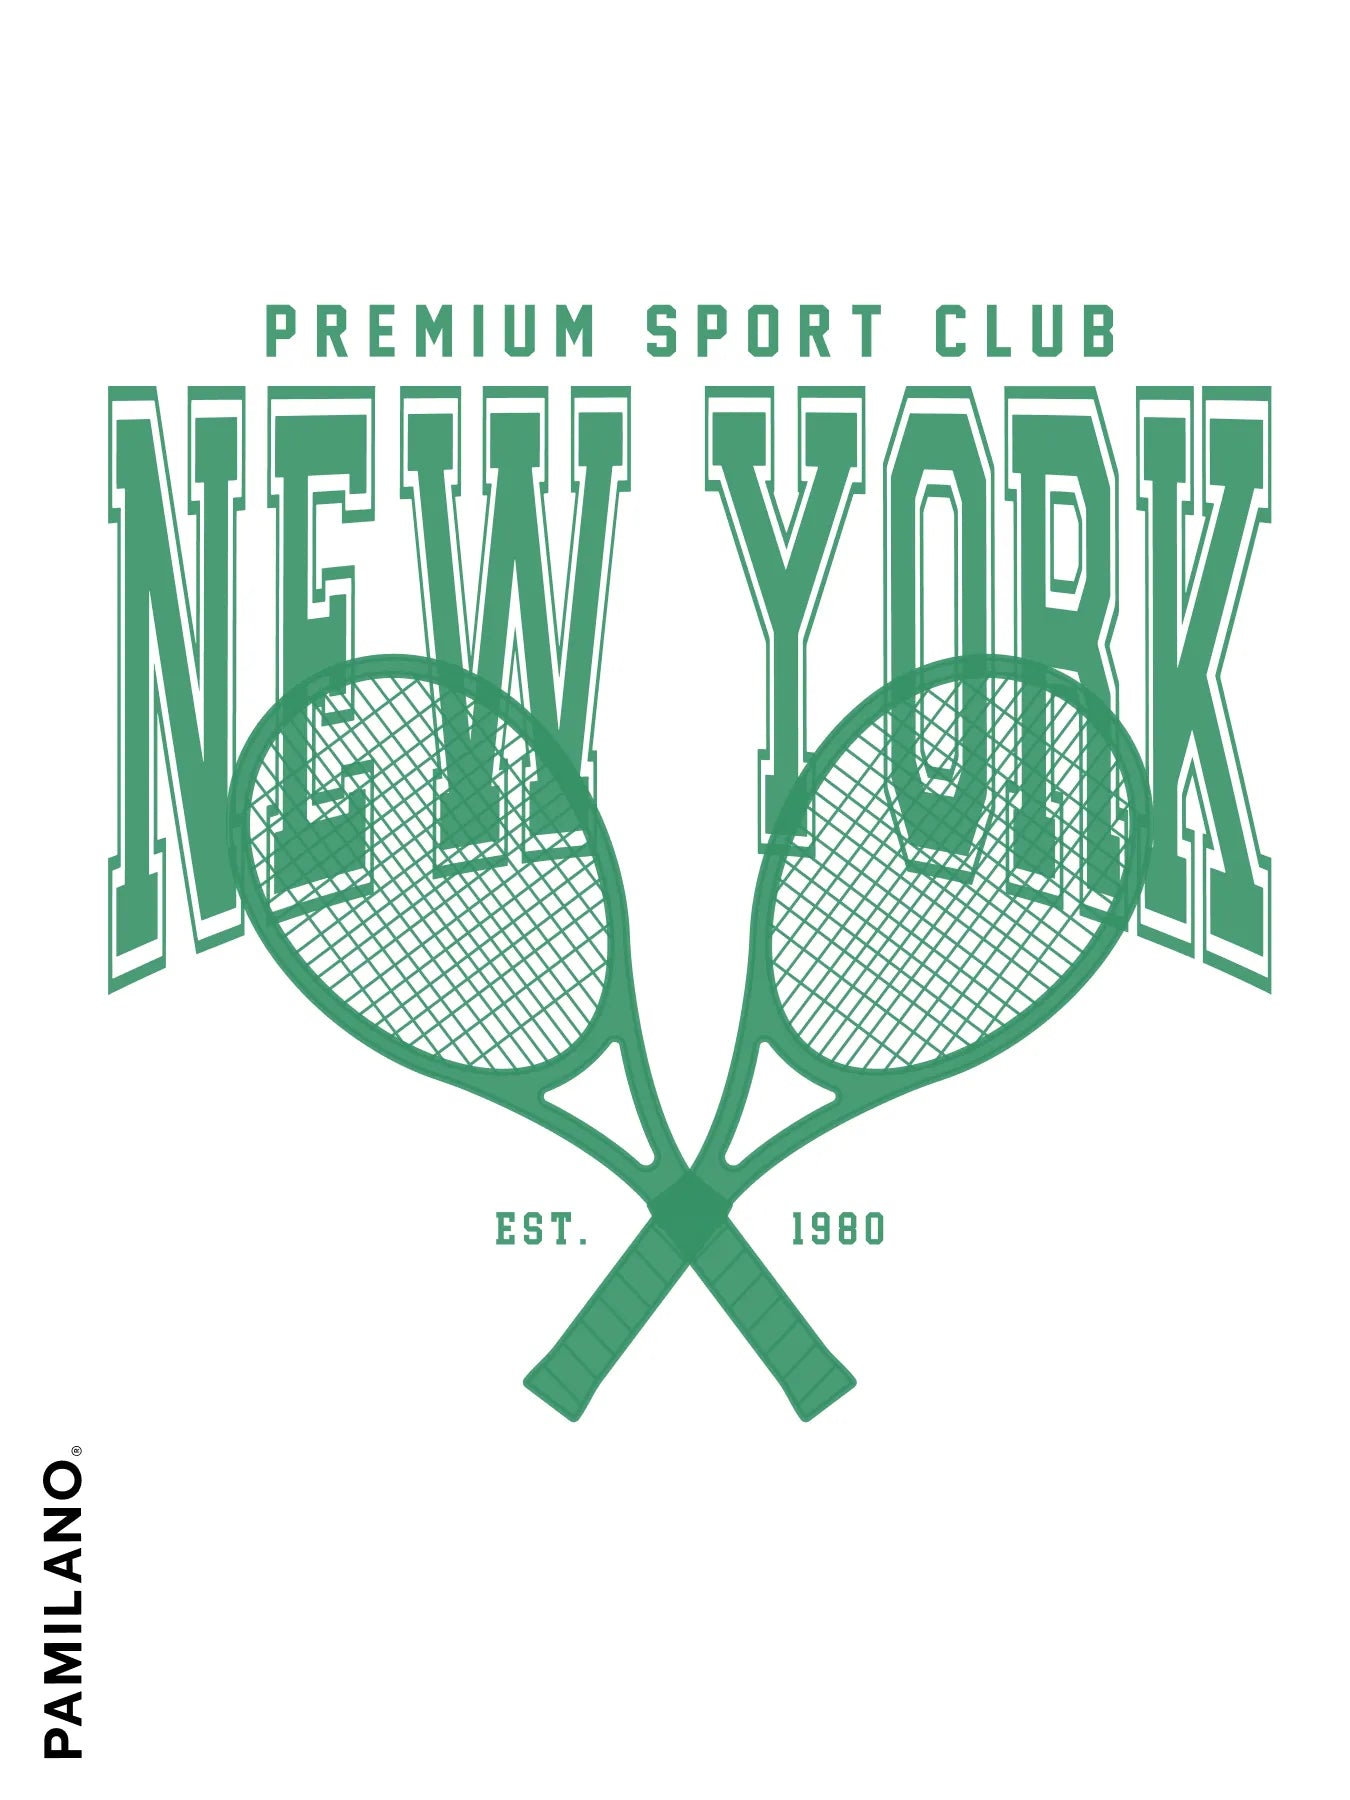 New York Tennis club Printed T-shirt